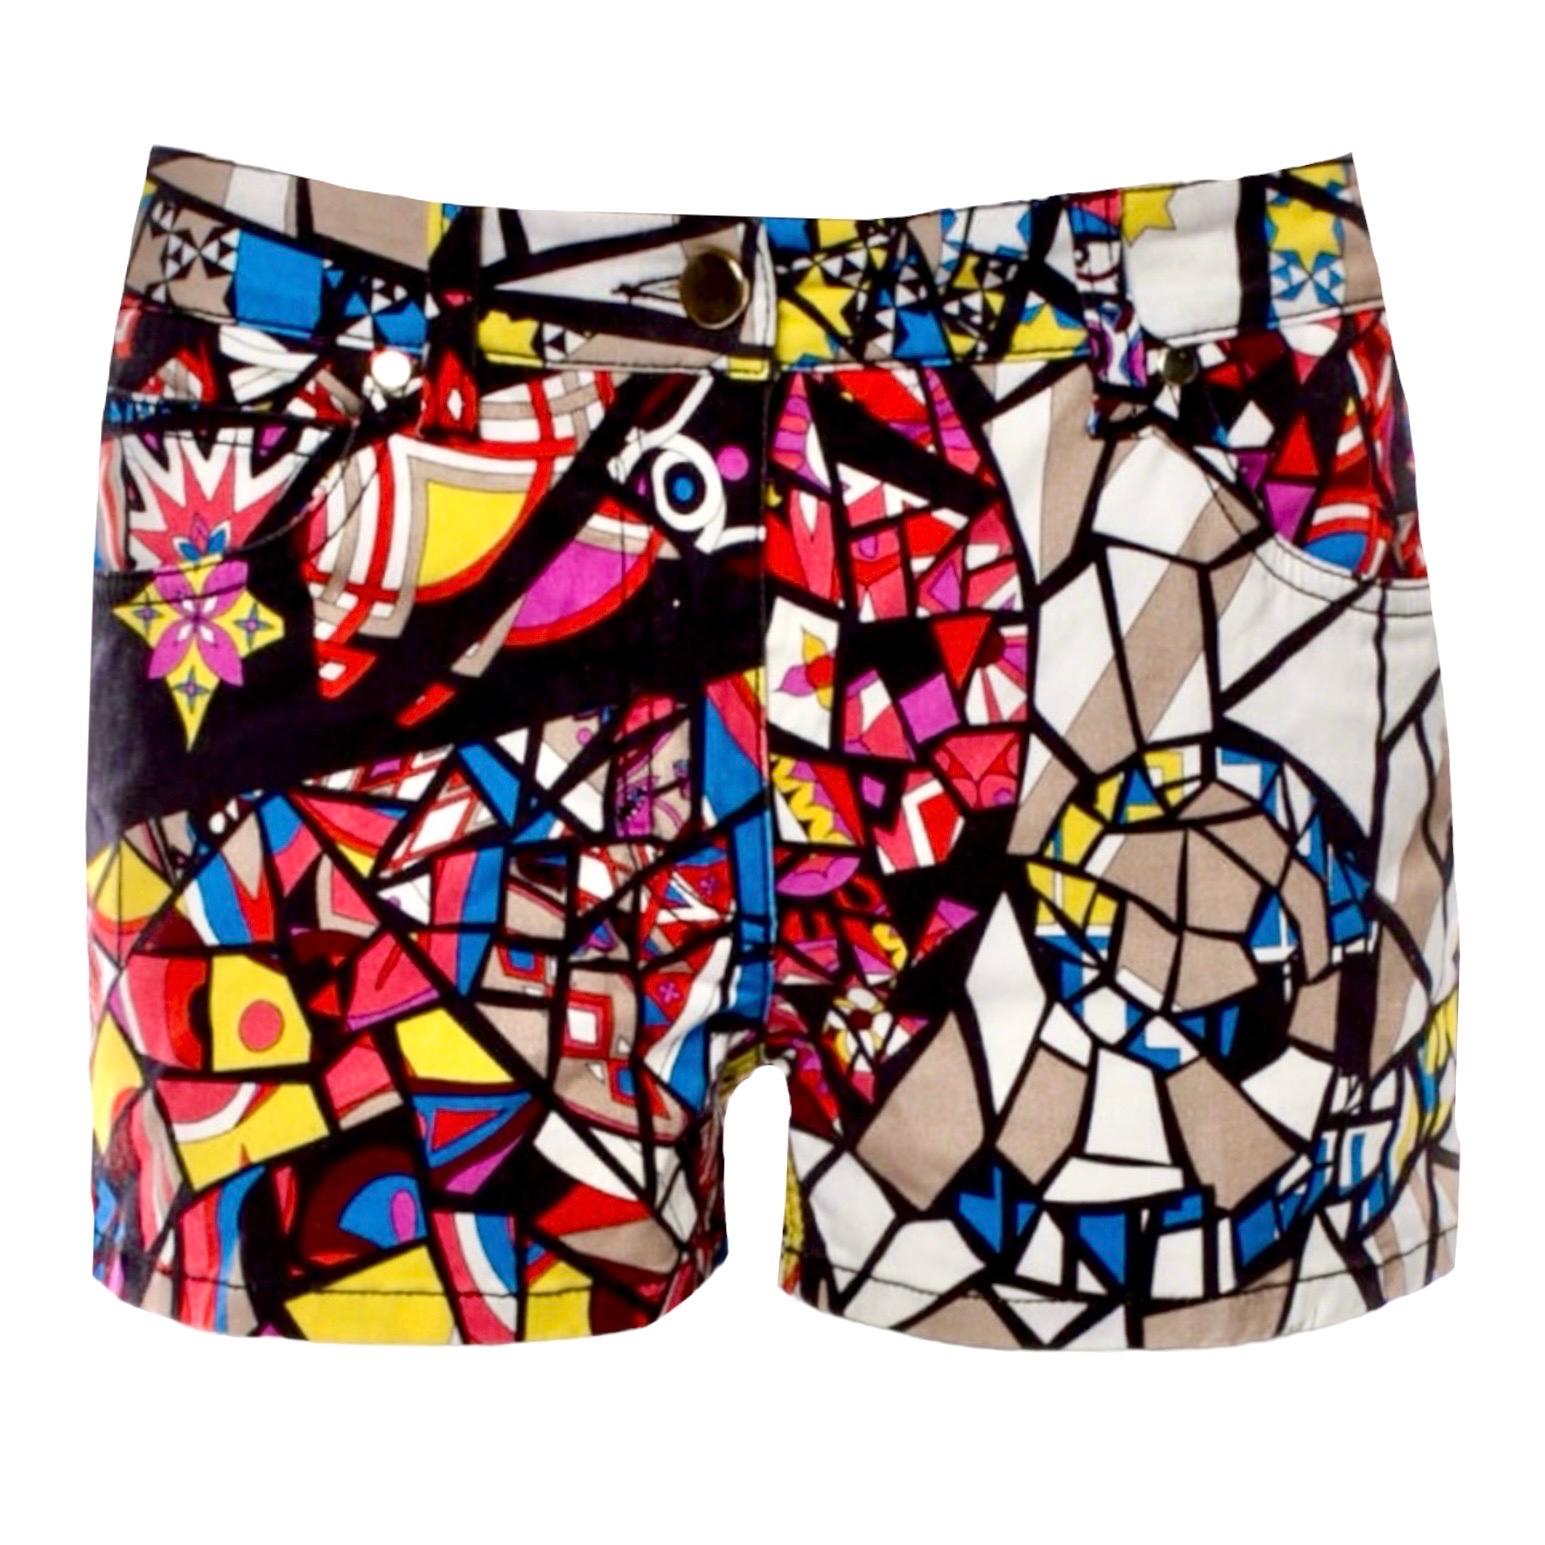 EMILIO PUCCI Multicolor Signature Geometric Print Hot Shorts Pants 42 For Sale